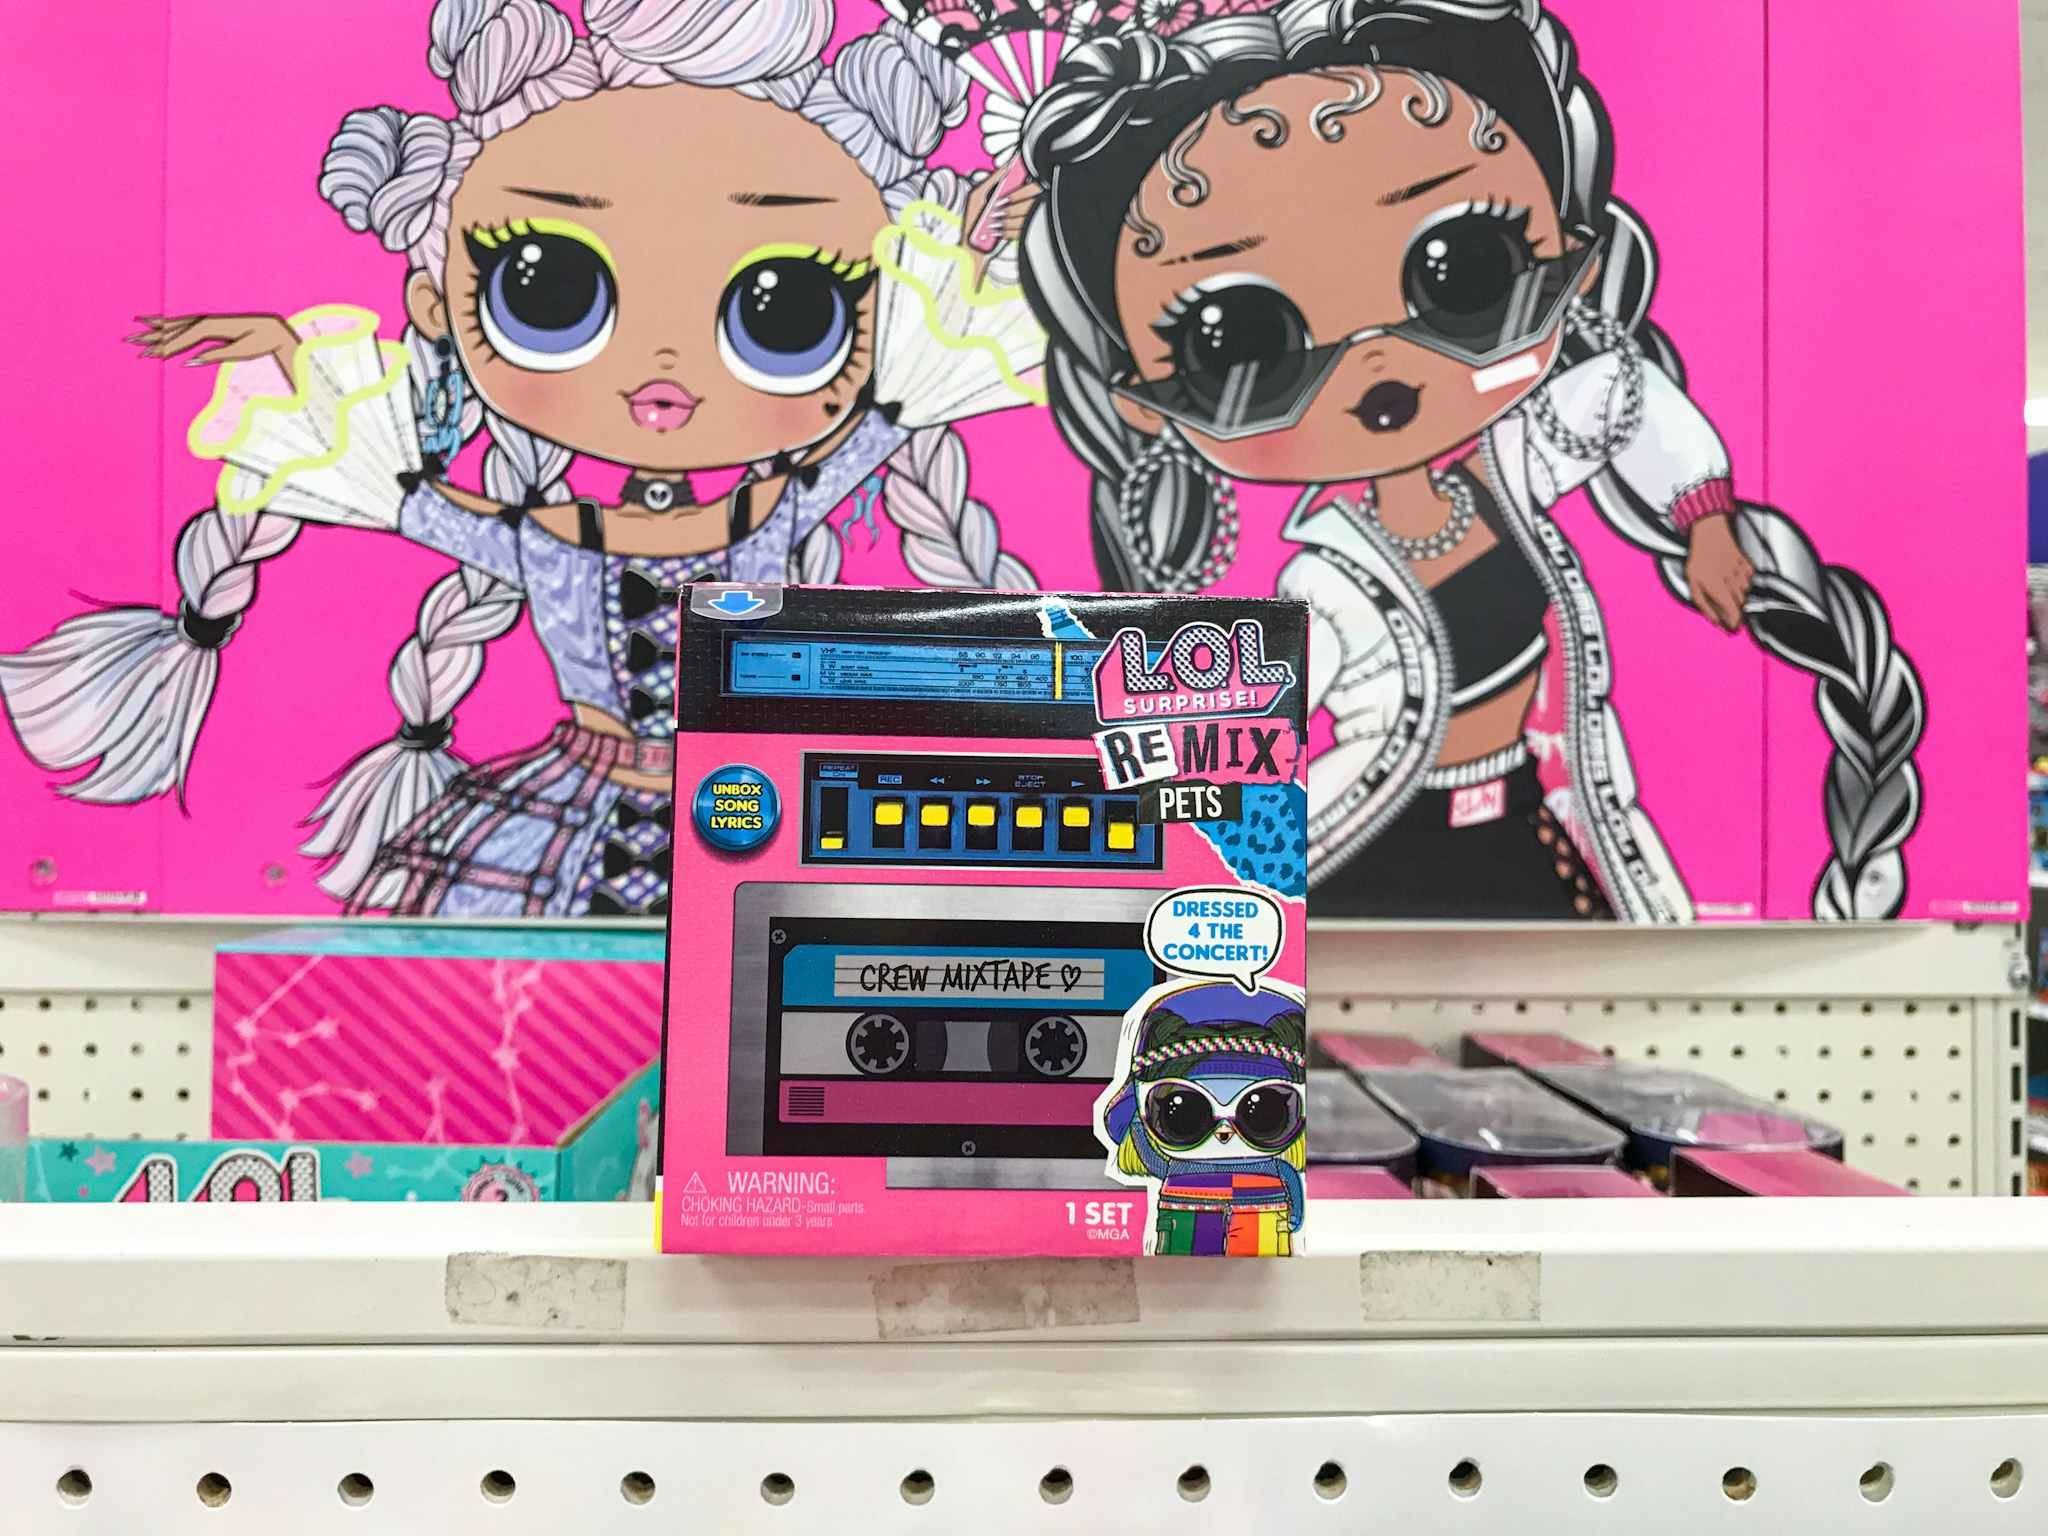 lol surprise remix pets on a shelf at Target